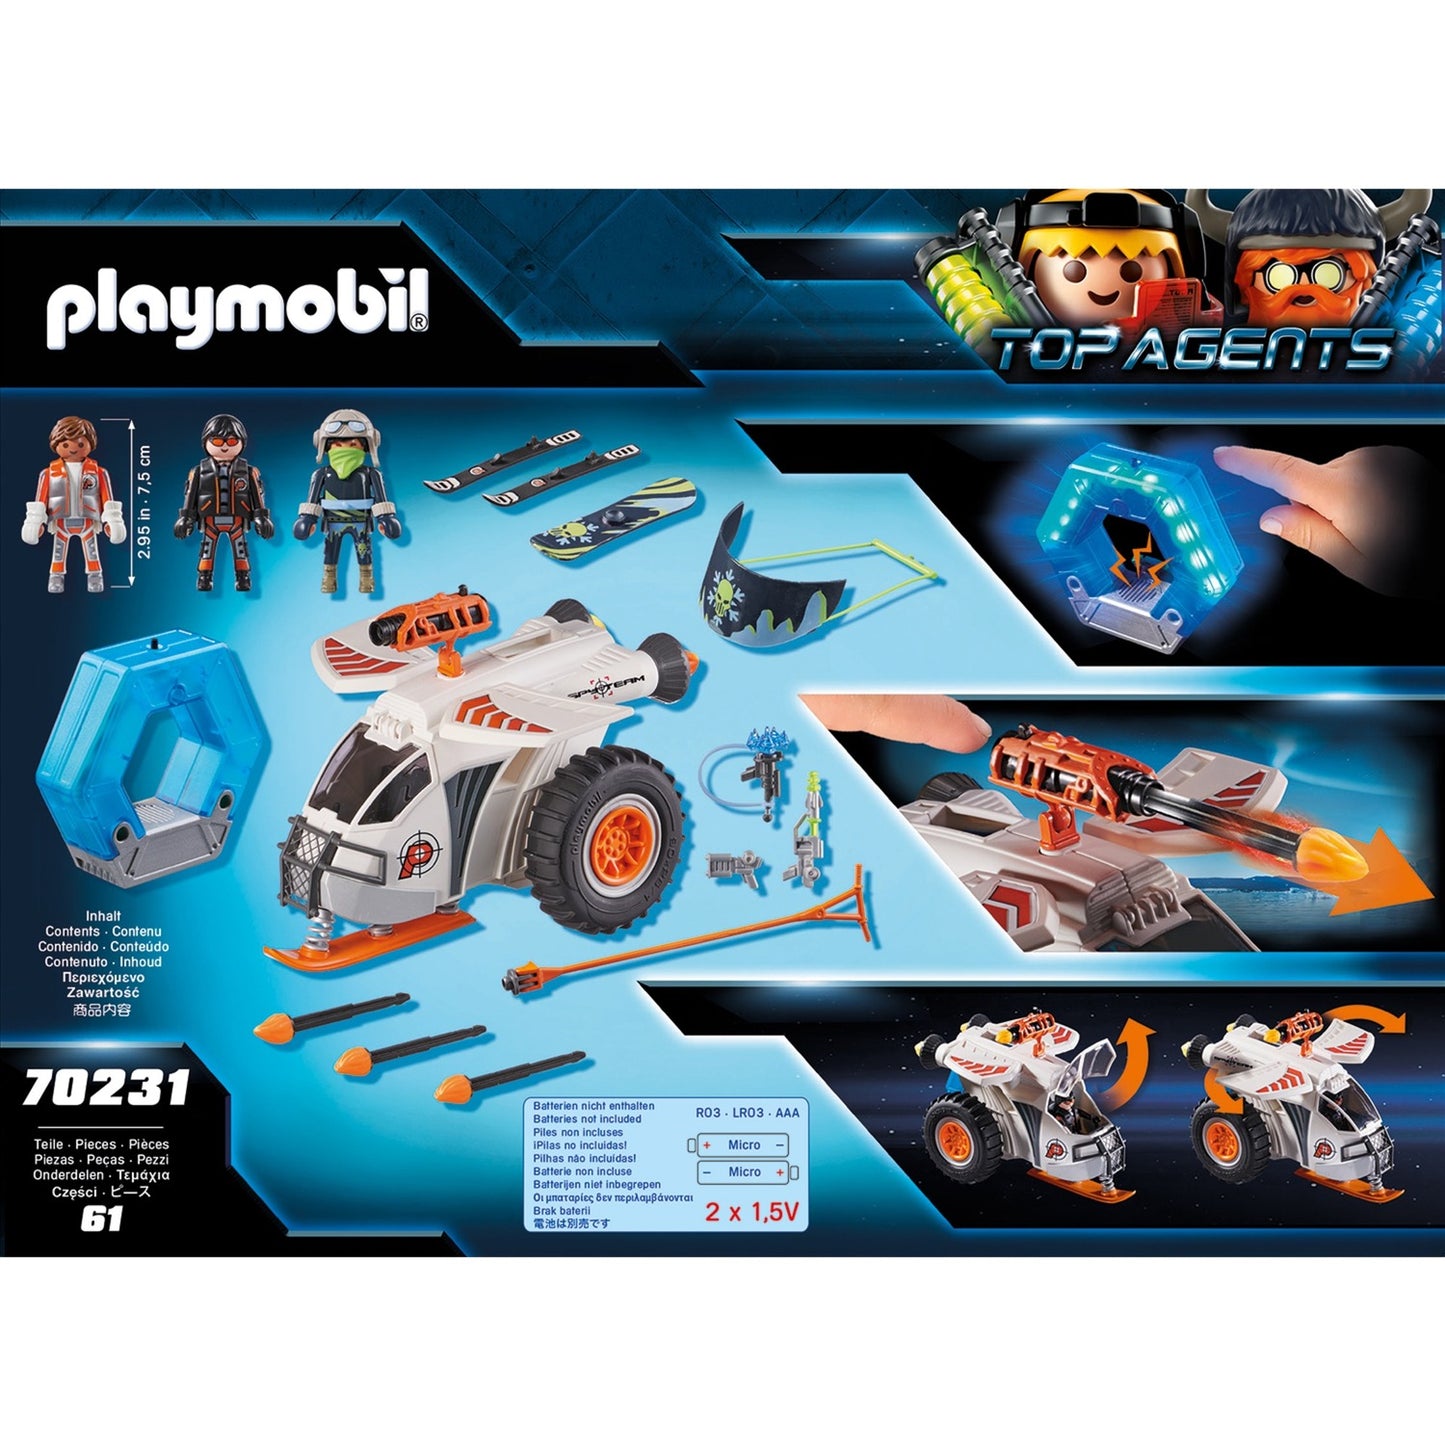 PlayMobil Top Agents Spy Team Snowmobile